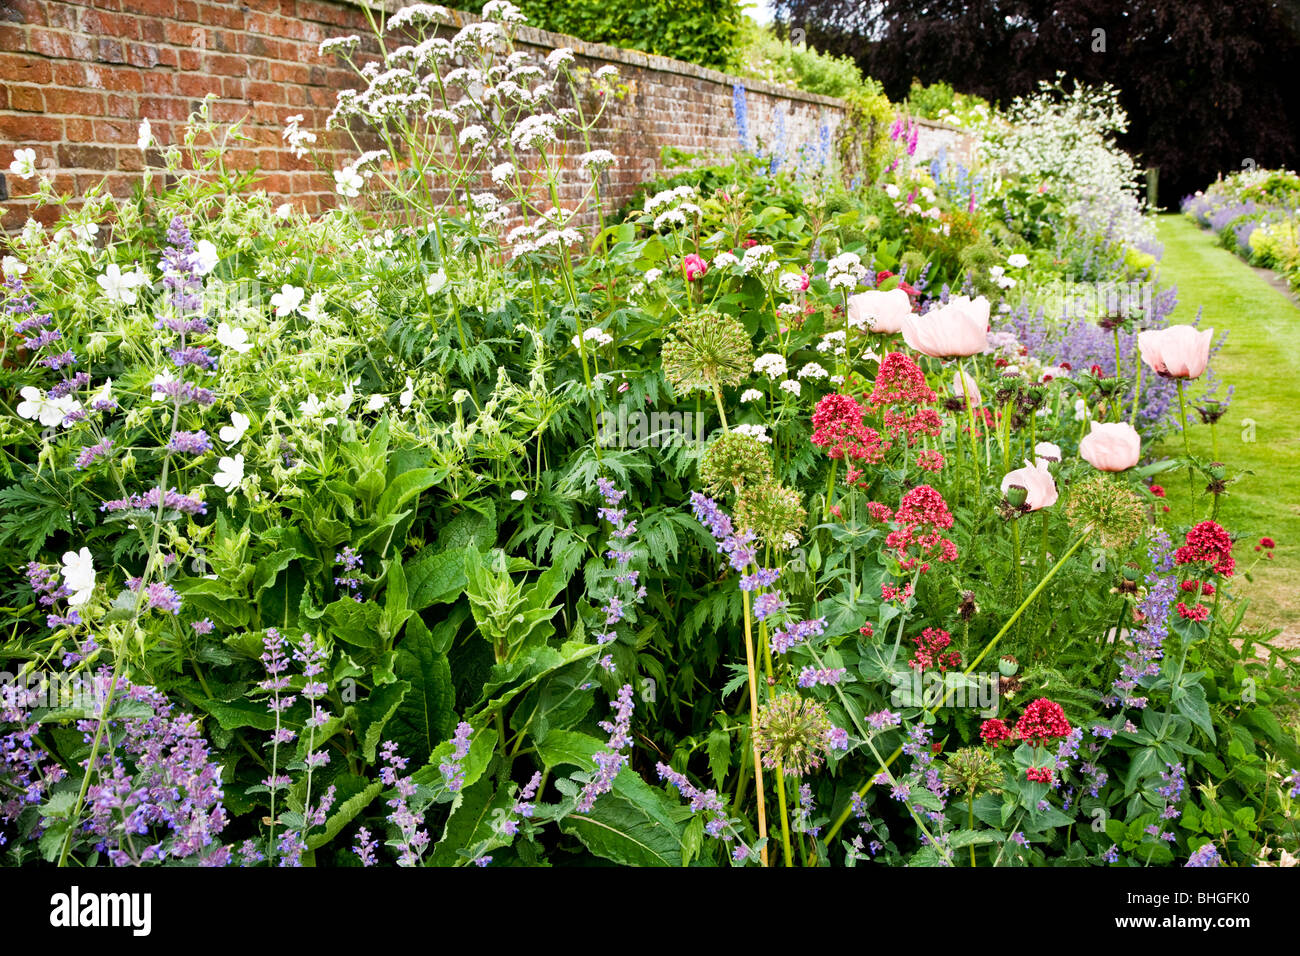 Herbaceous perennial flower border in an English country garden Stock Photo